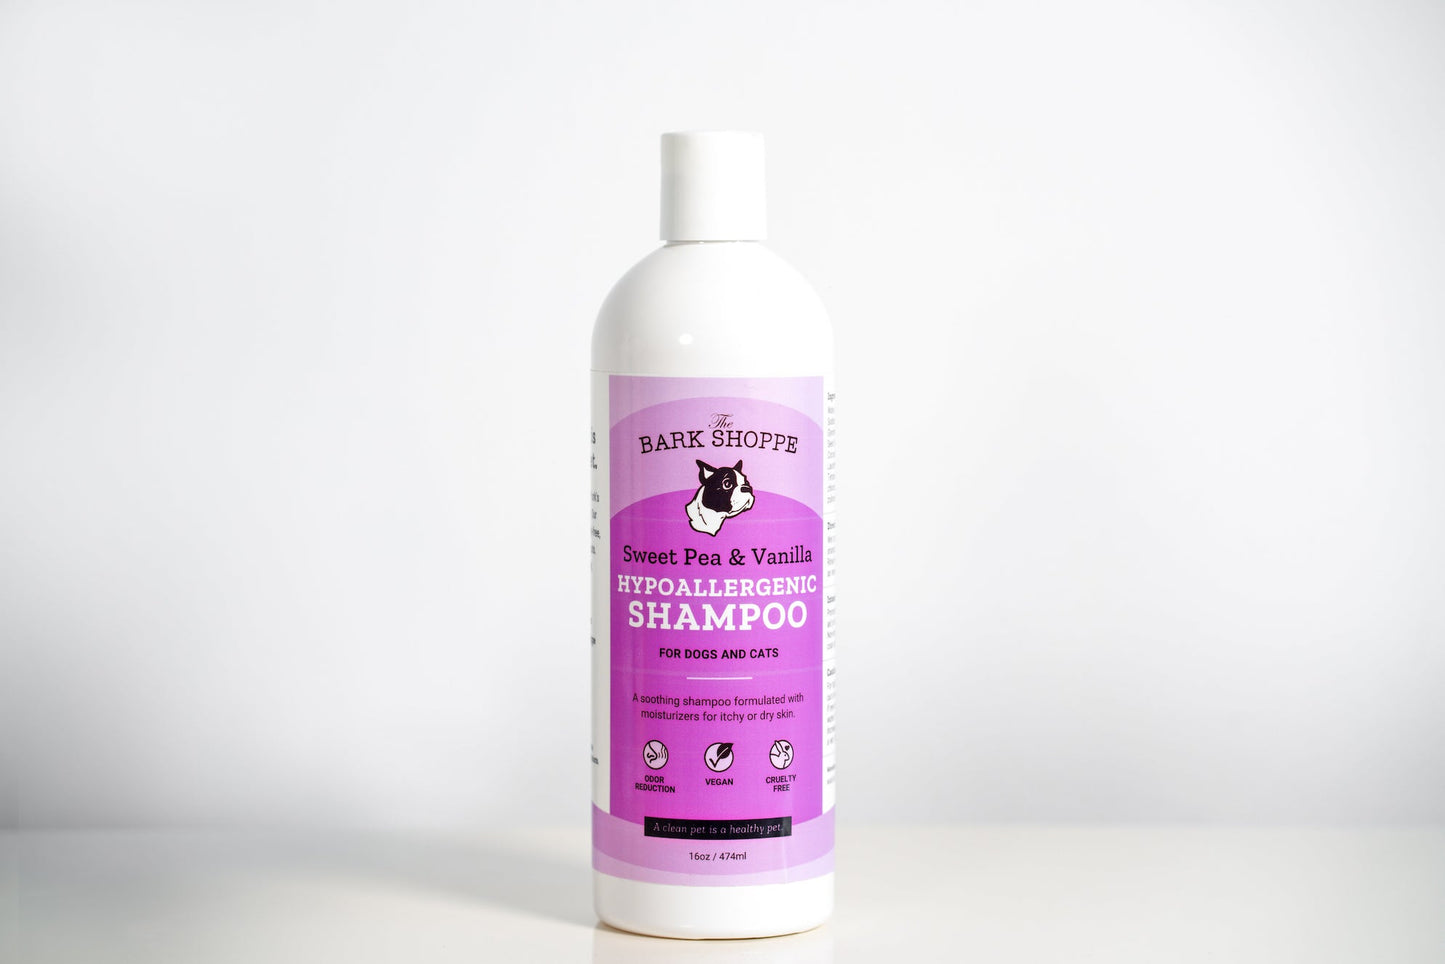 Sweet Pea and Vanilla Hypo Allergenic Shampoo